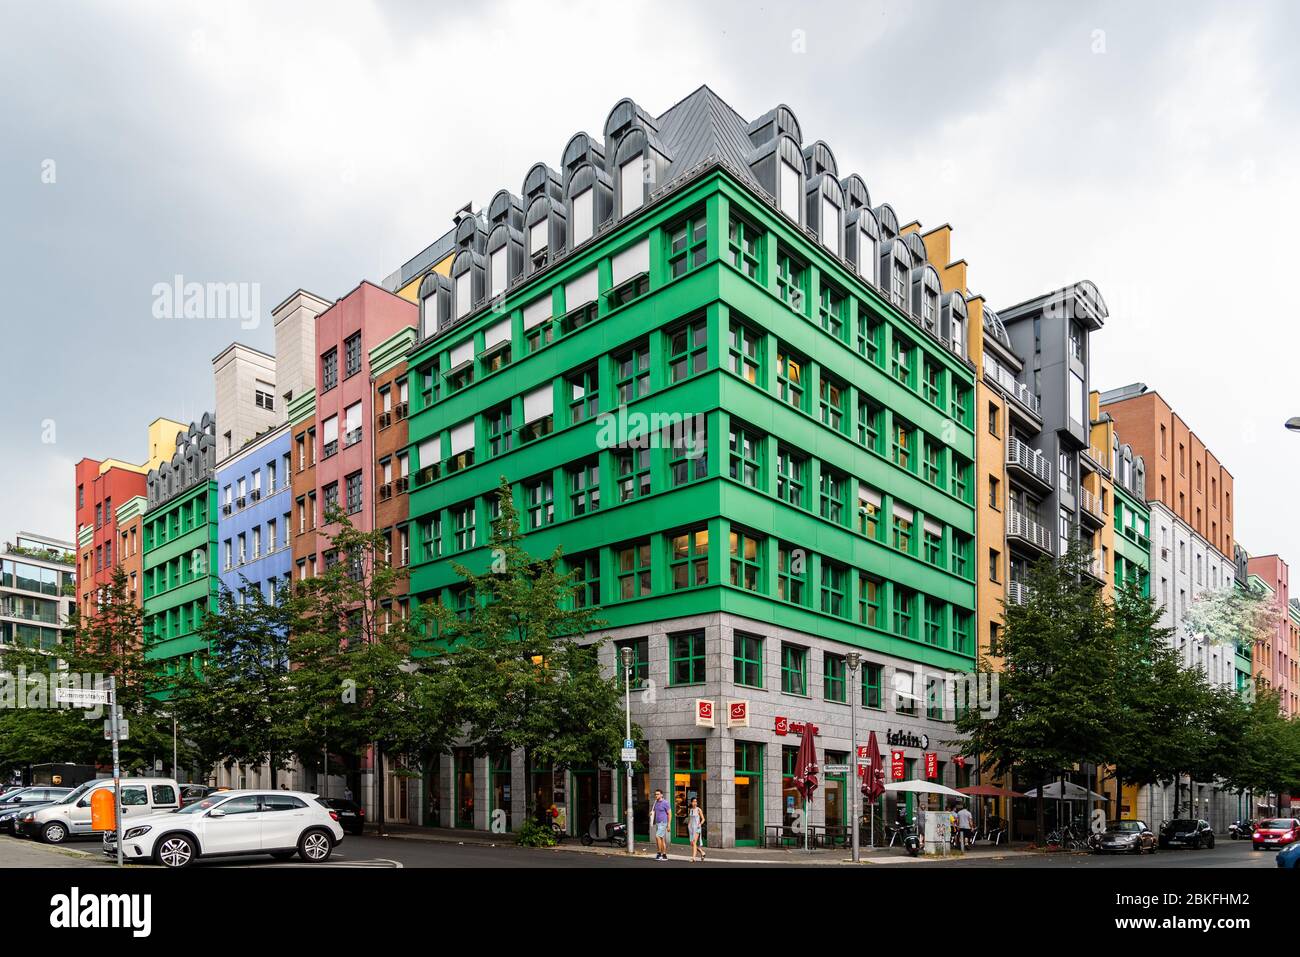 Skole lærer appel marts Berlin, Germany - July 29, 2019: Colorful residential buildings in Quartier  Schutzenstrasse designed by italian architect Aldo Rossi Stock Photo - Alamy